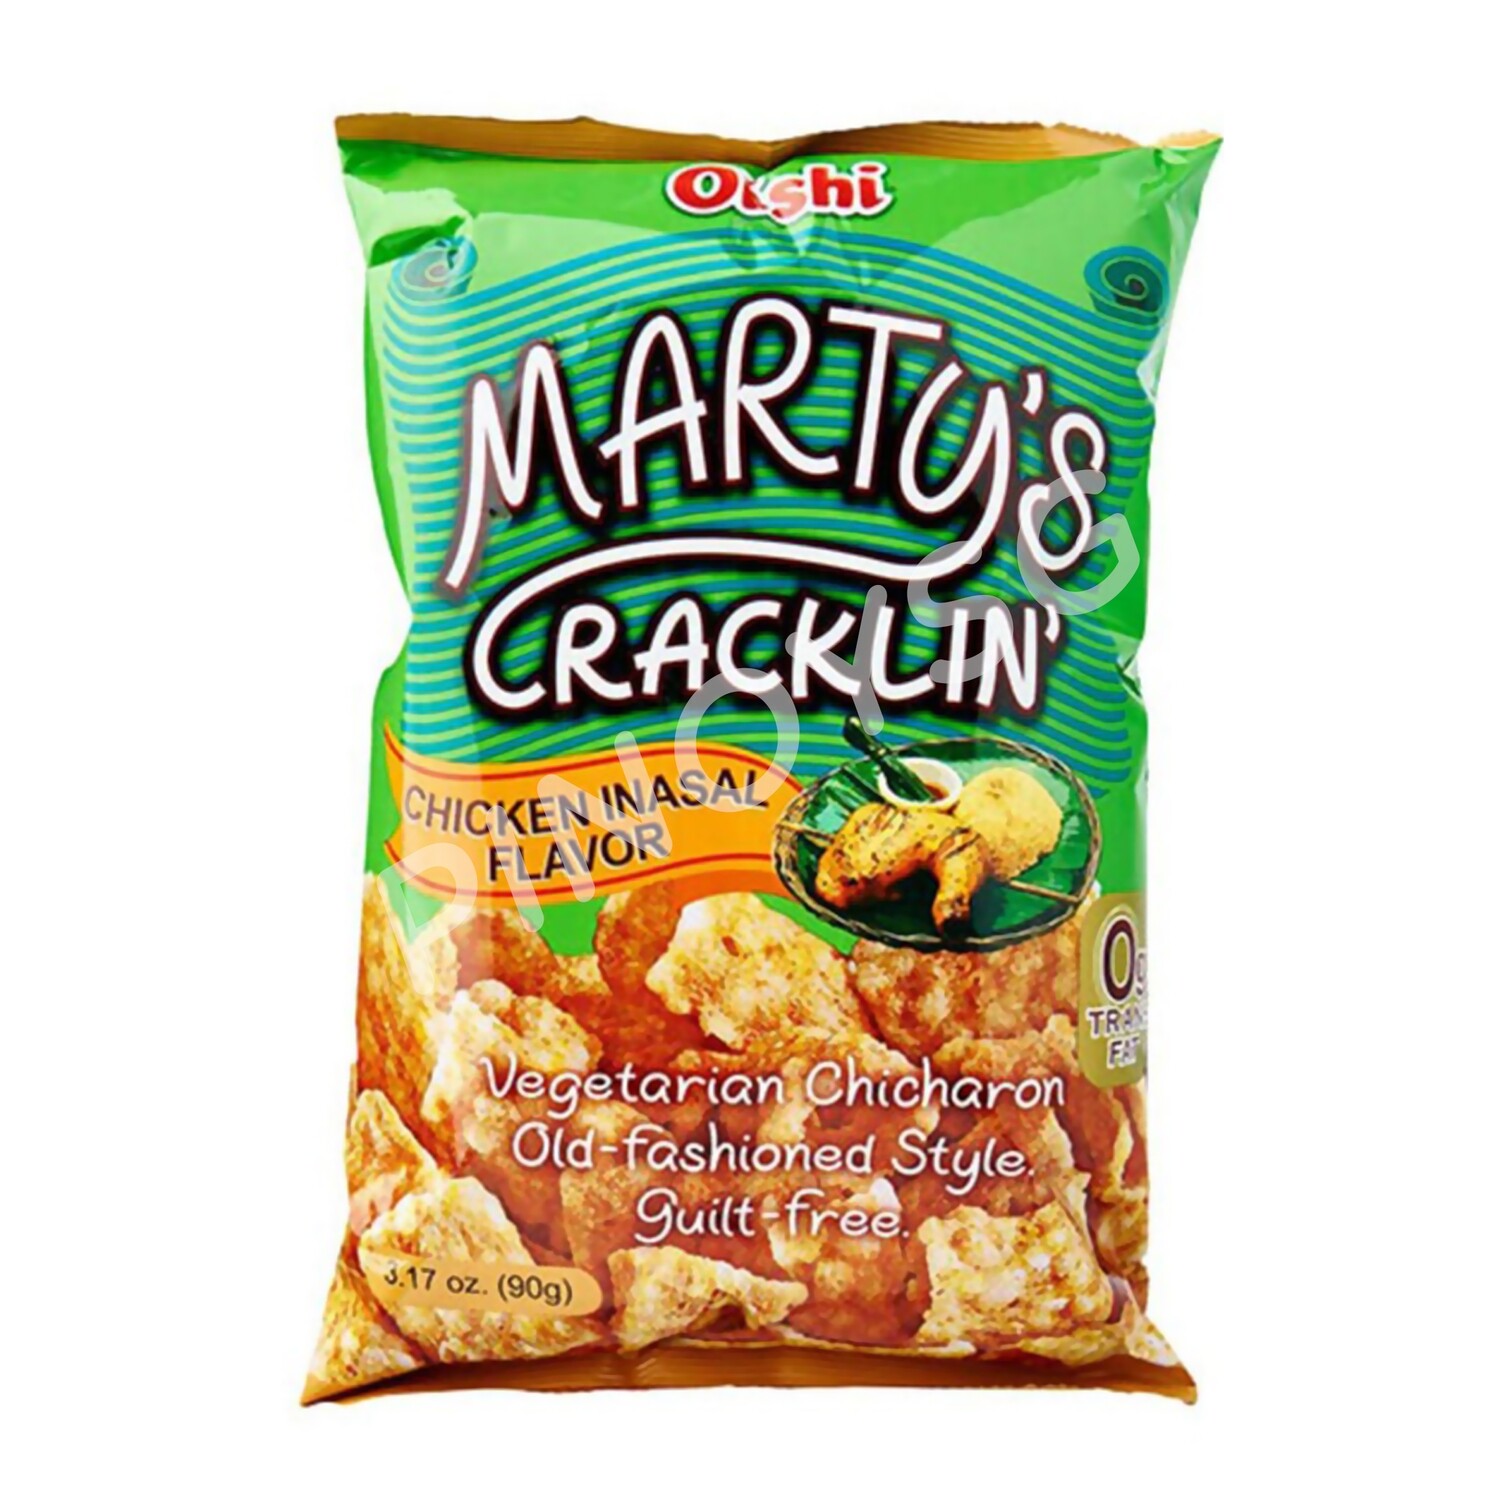 Oishi Marty’s Cracklin’ Chicken Inasal 90g